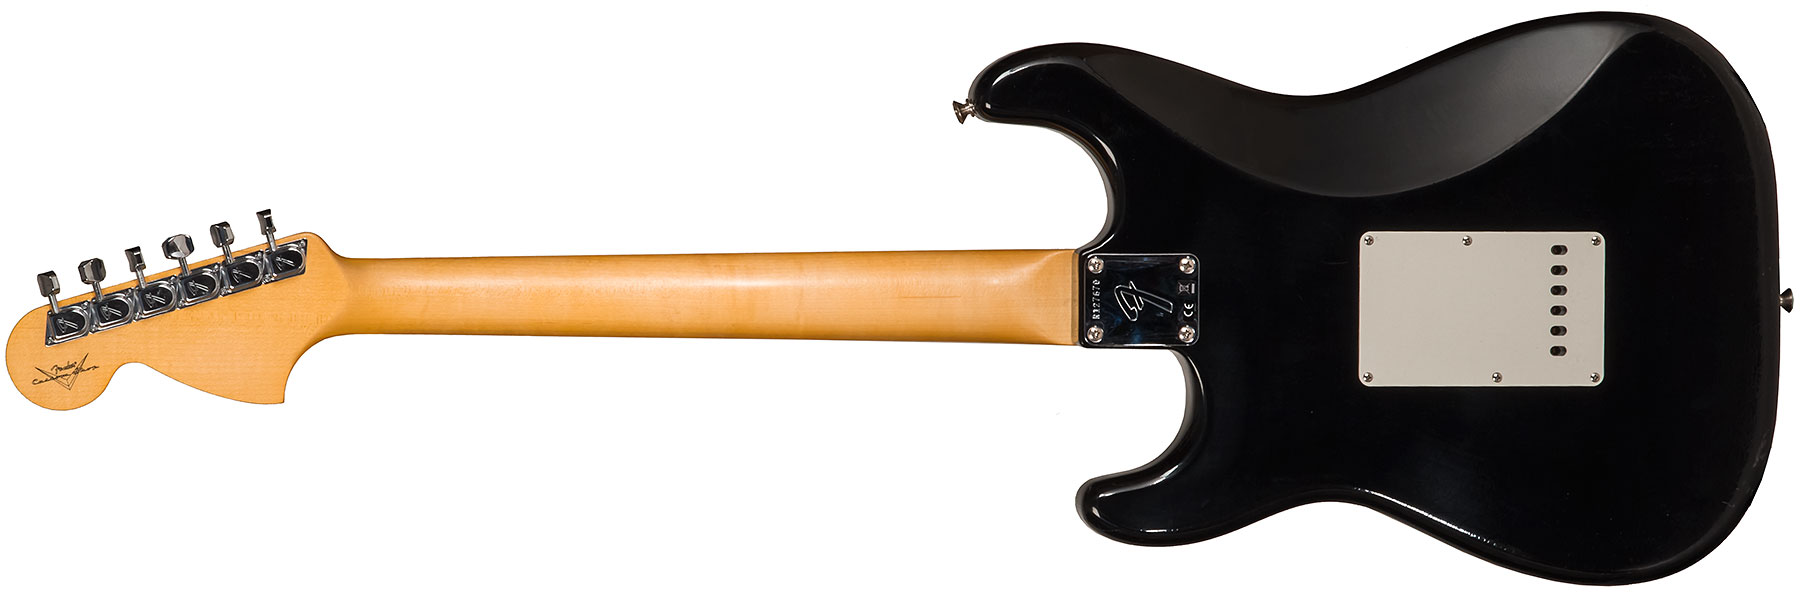 Fender Custom Shop Strat 1969 3s Trem Mn #r127670 - Closet Classic Black - Str shape electric guitar - Variation 1